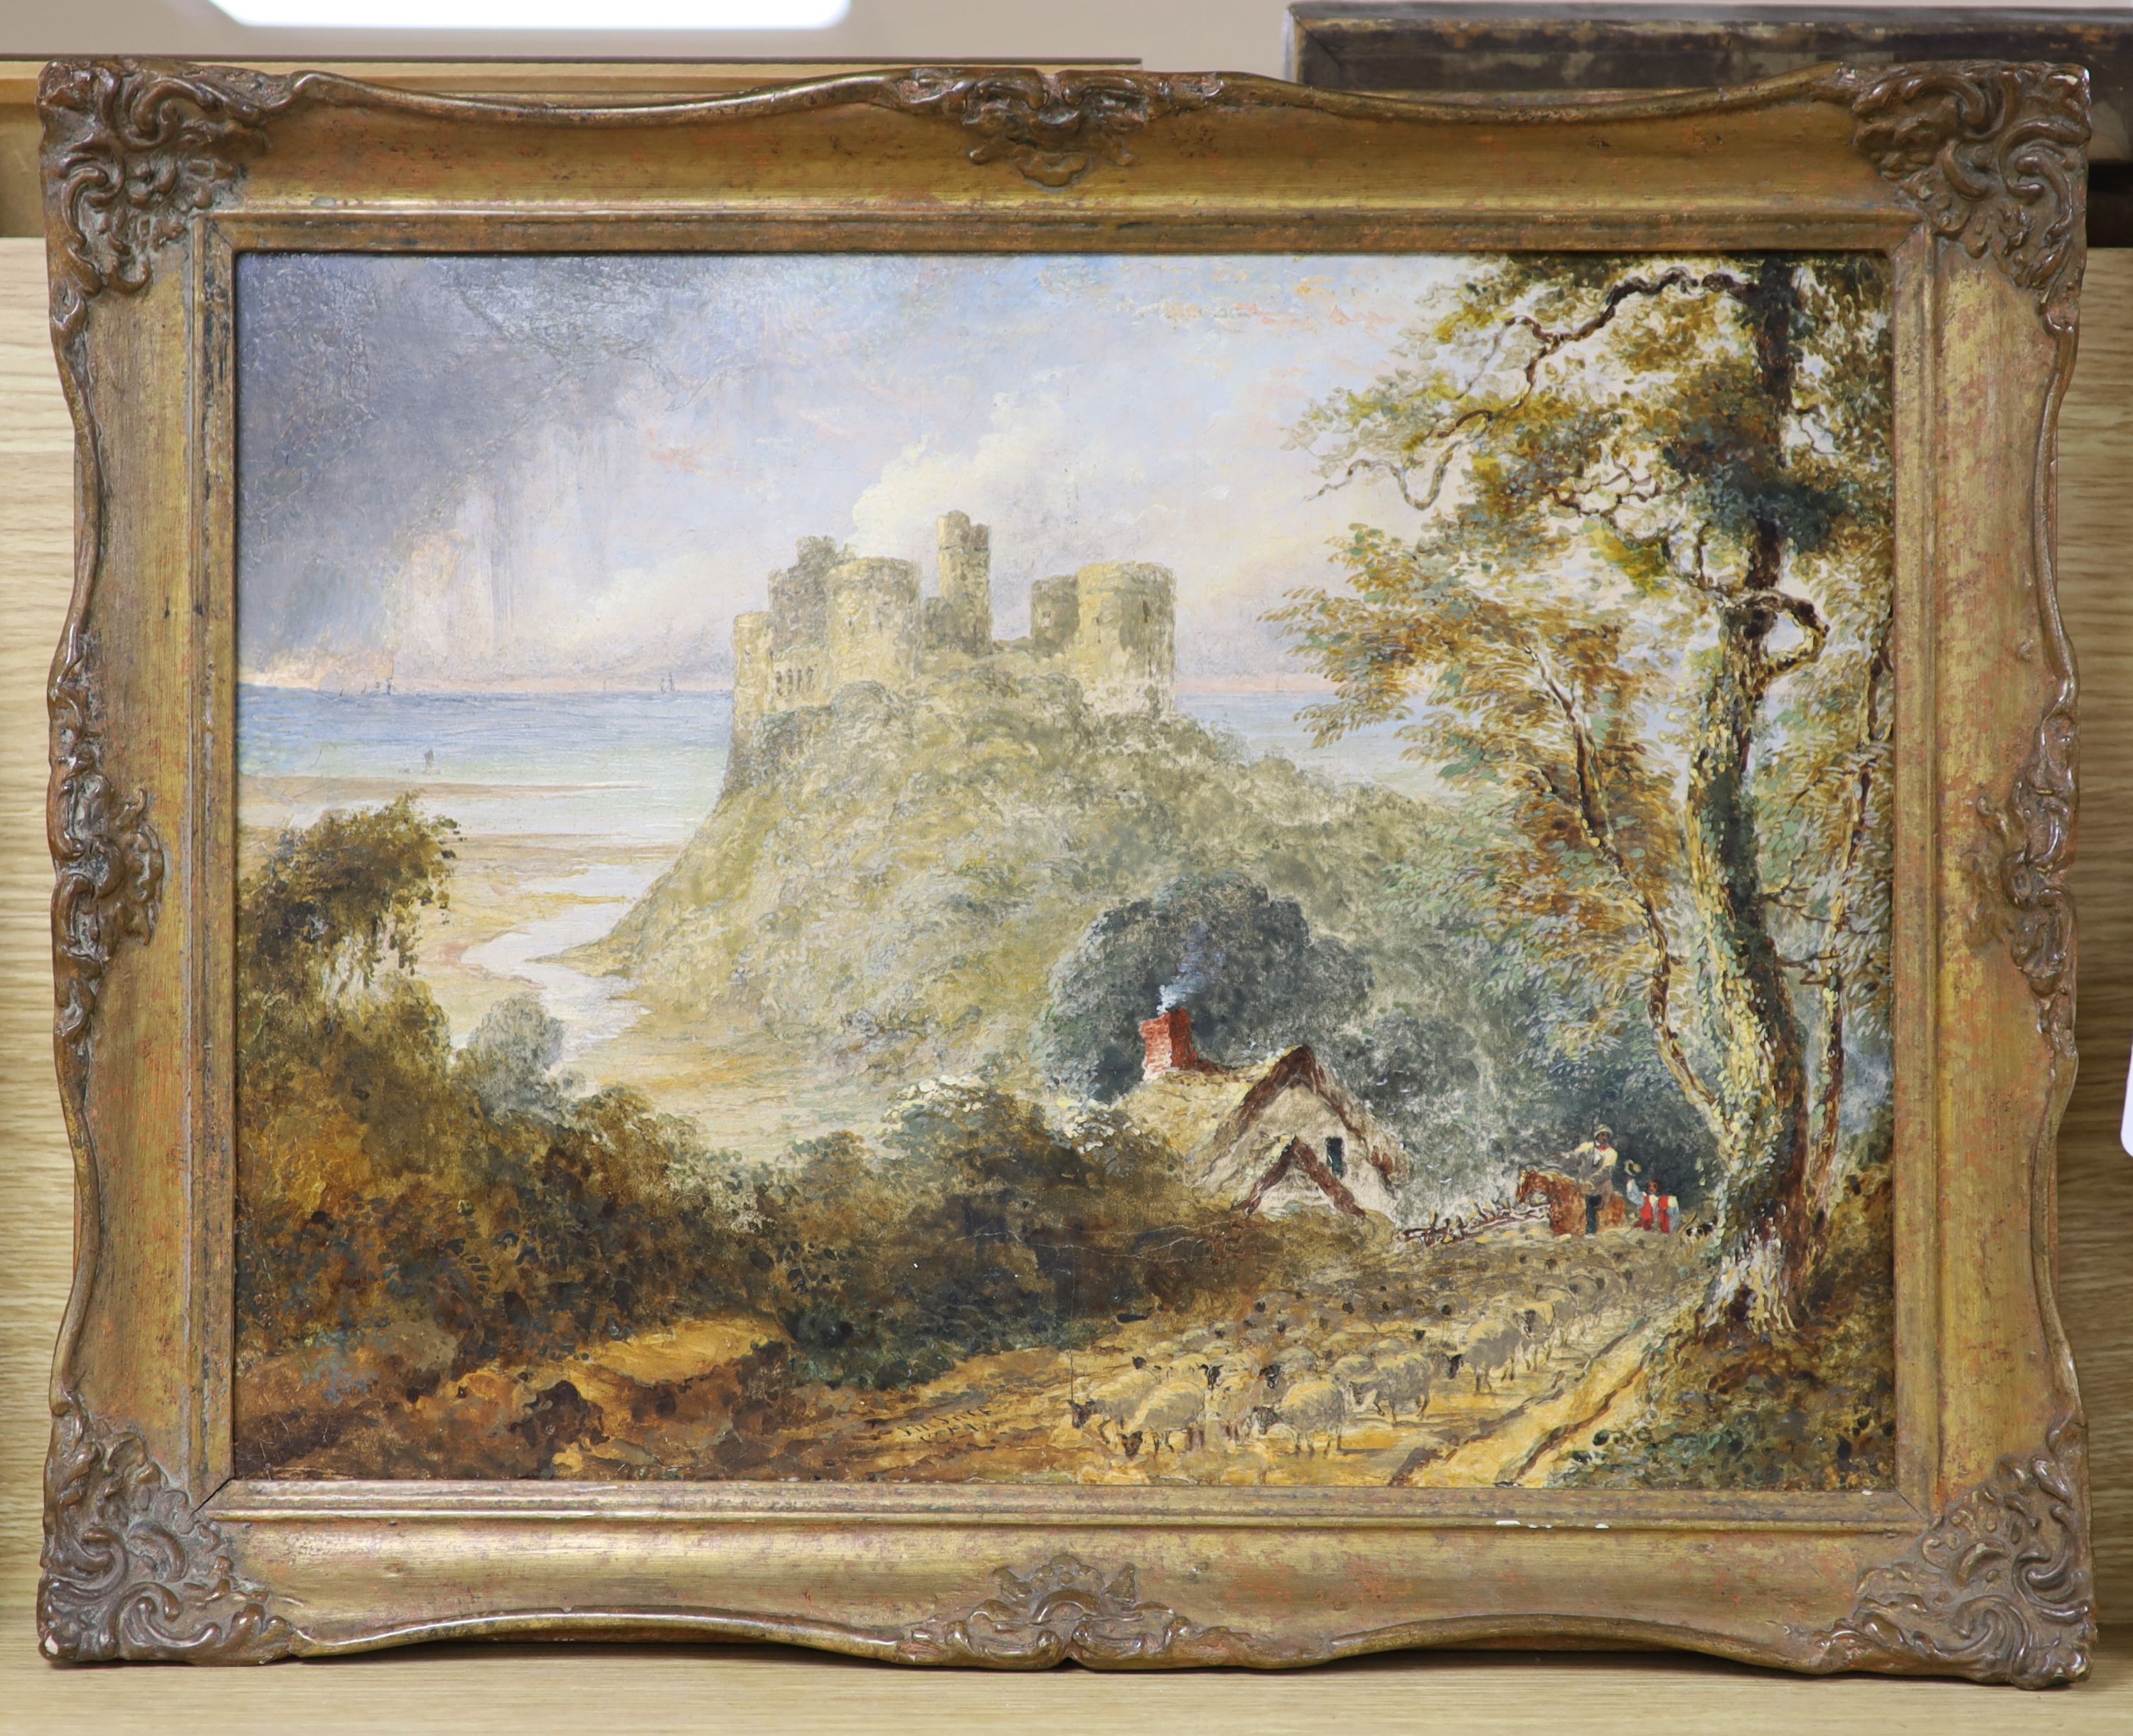 After Nasmyth, oil on canvas, coastal landscape with a castle, 30 x 40cm.